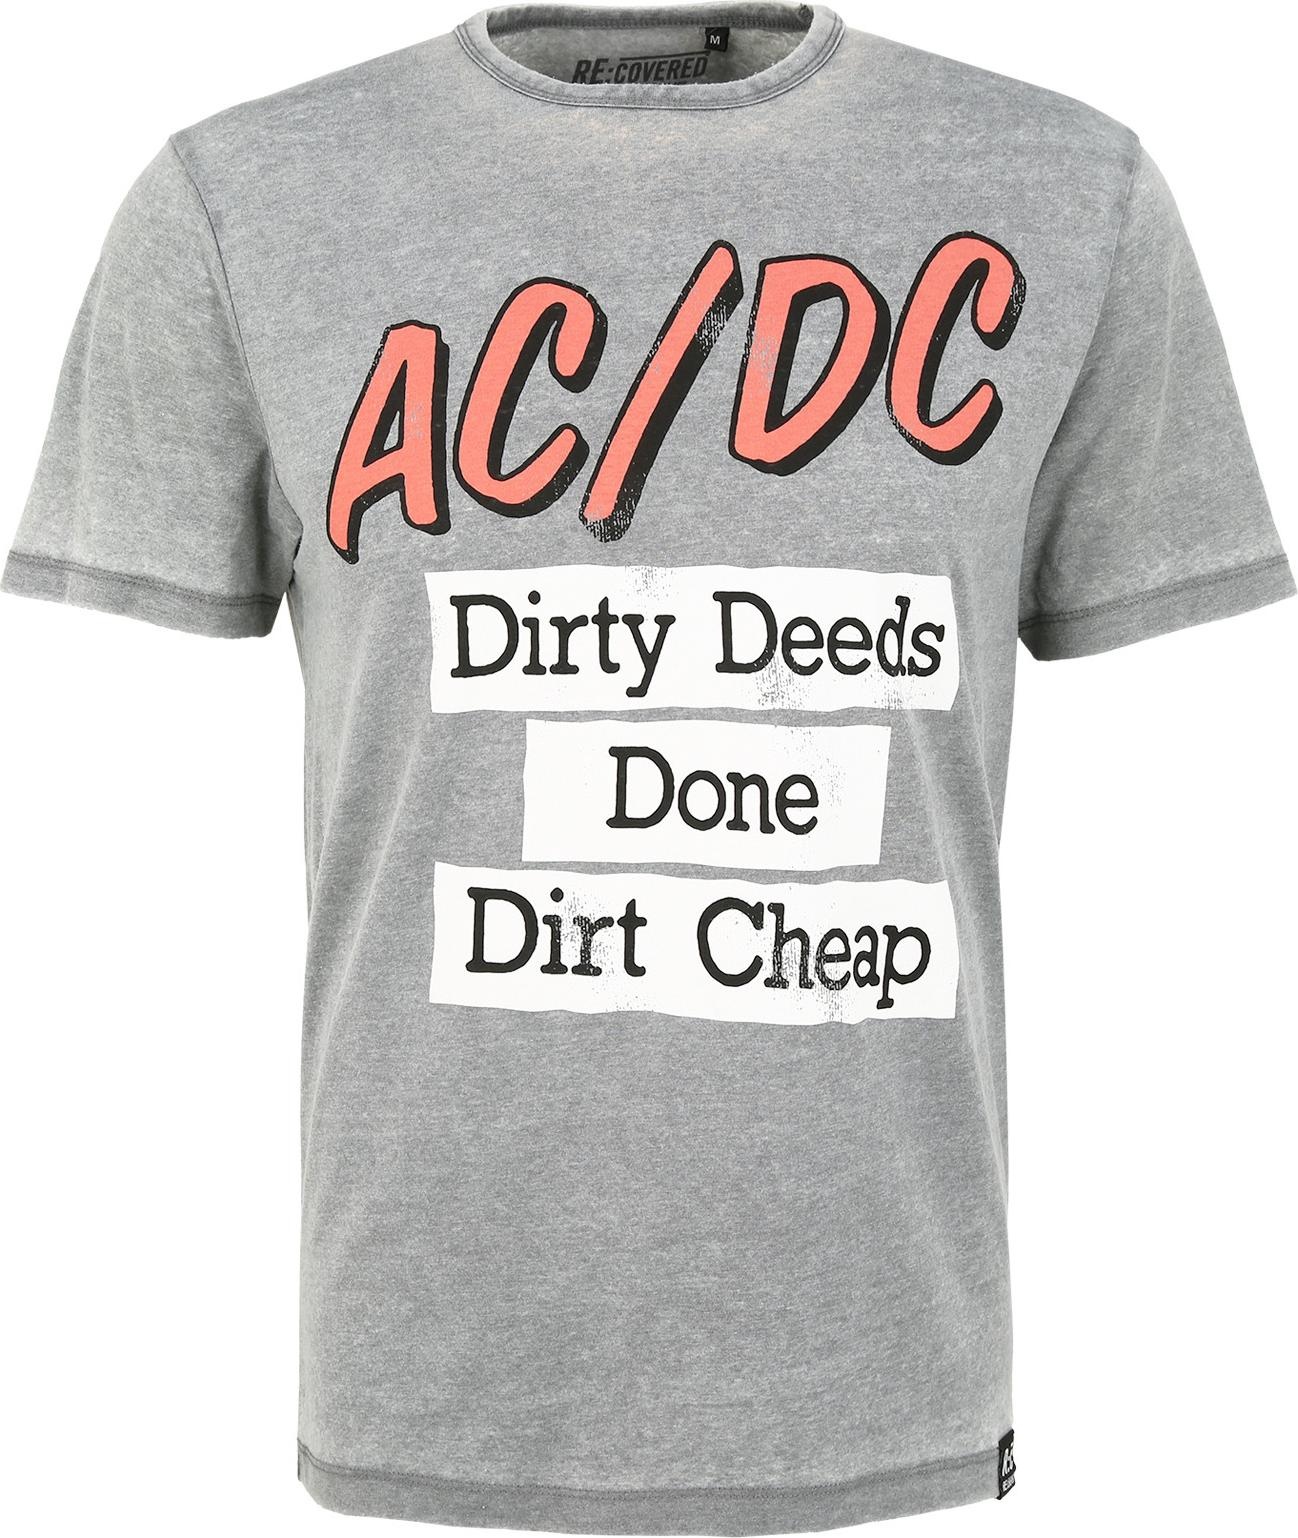 Recovered, Herren, Shirt, ACDC Dirty Deeds Done Cheap Light Grey, Grau, (L)